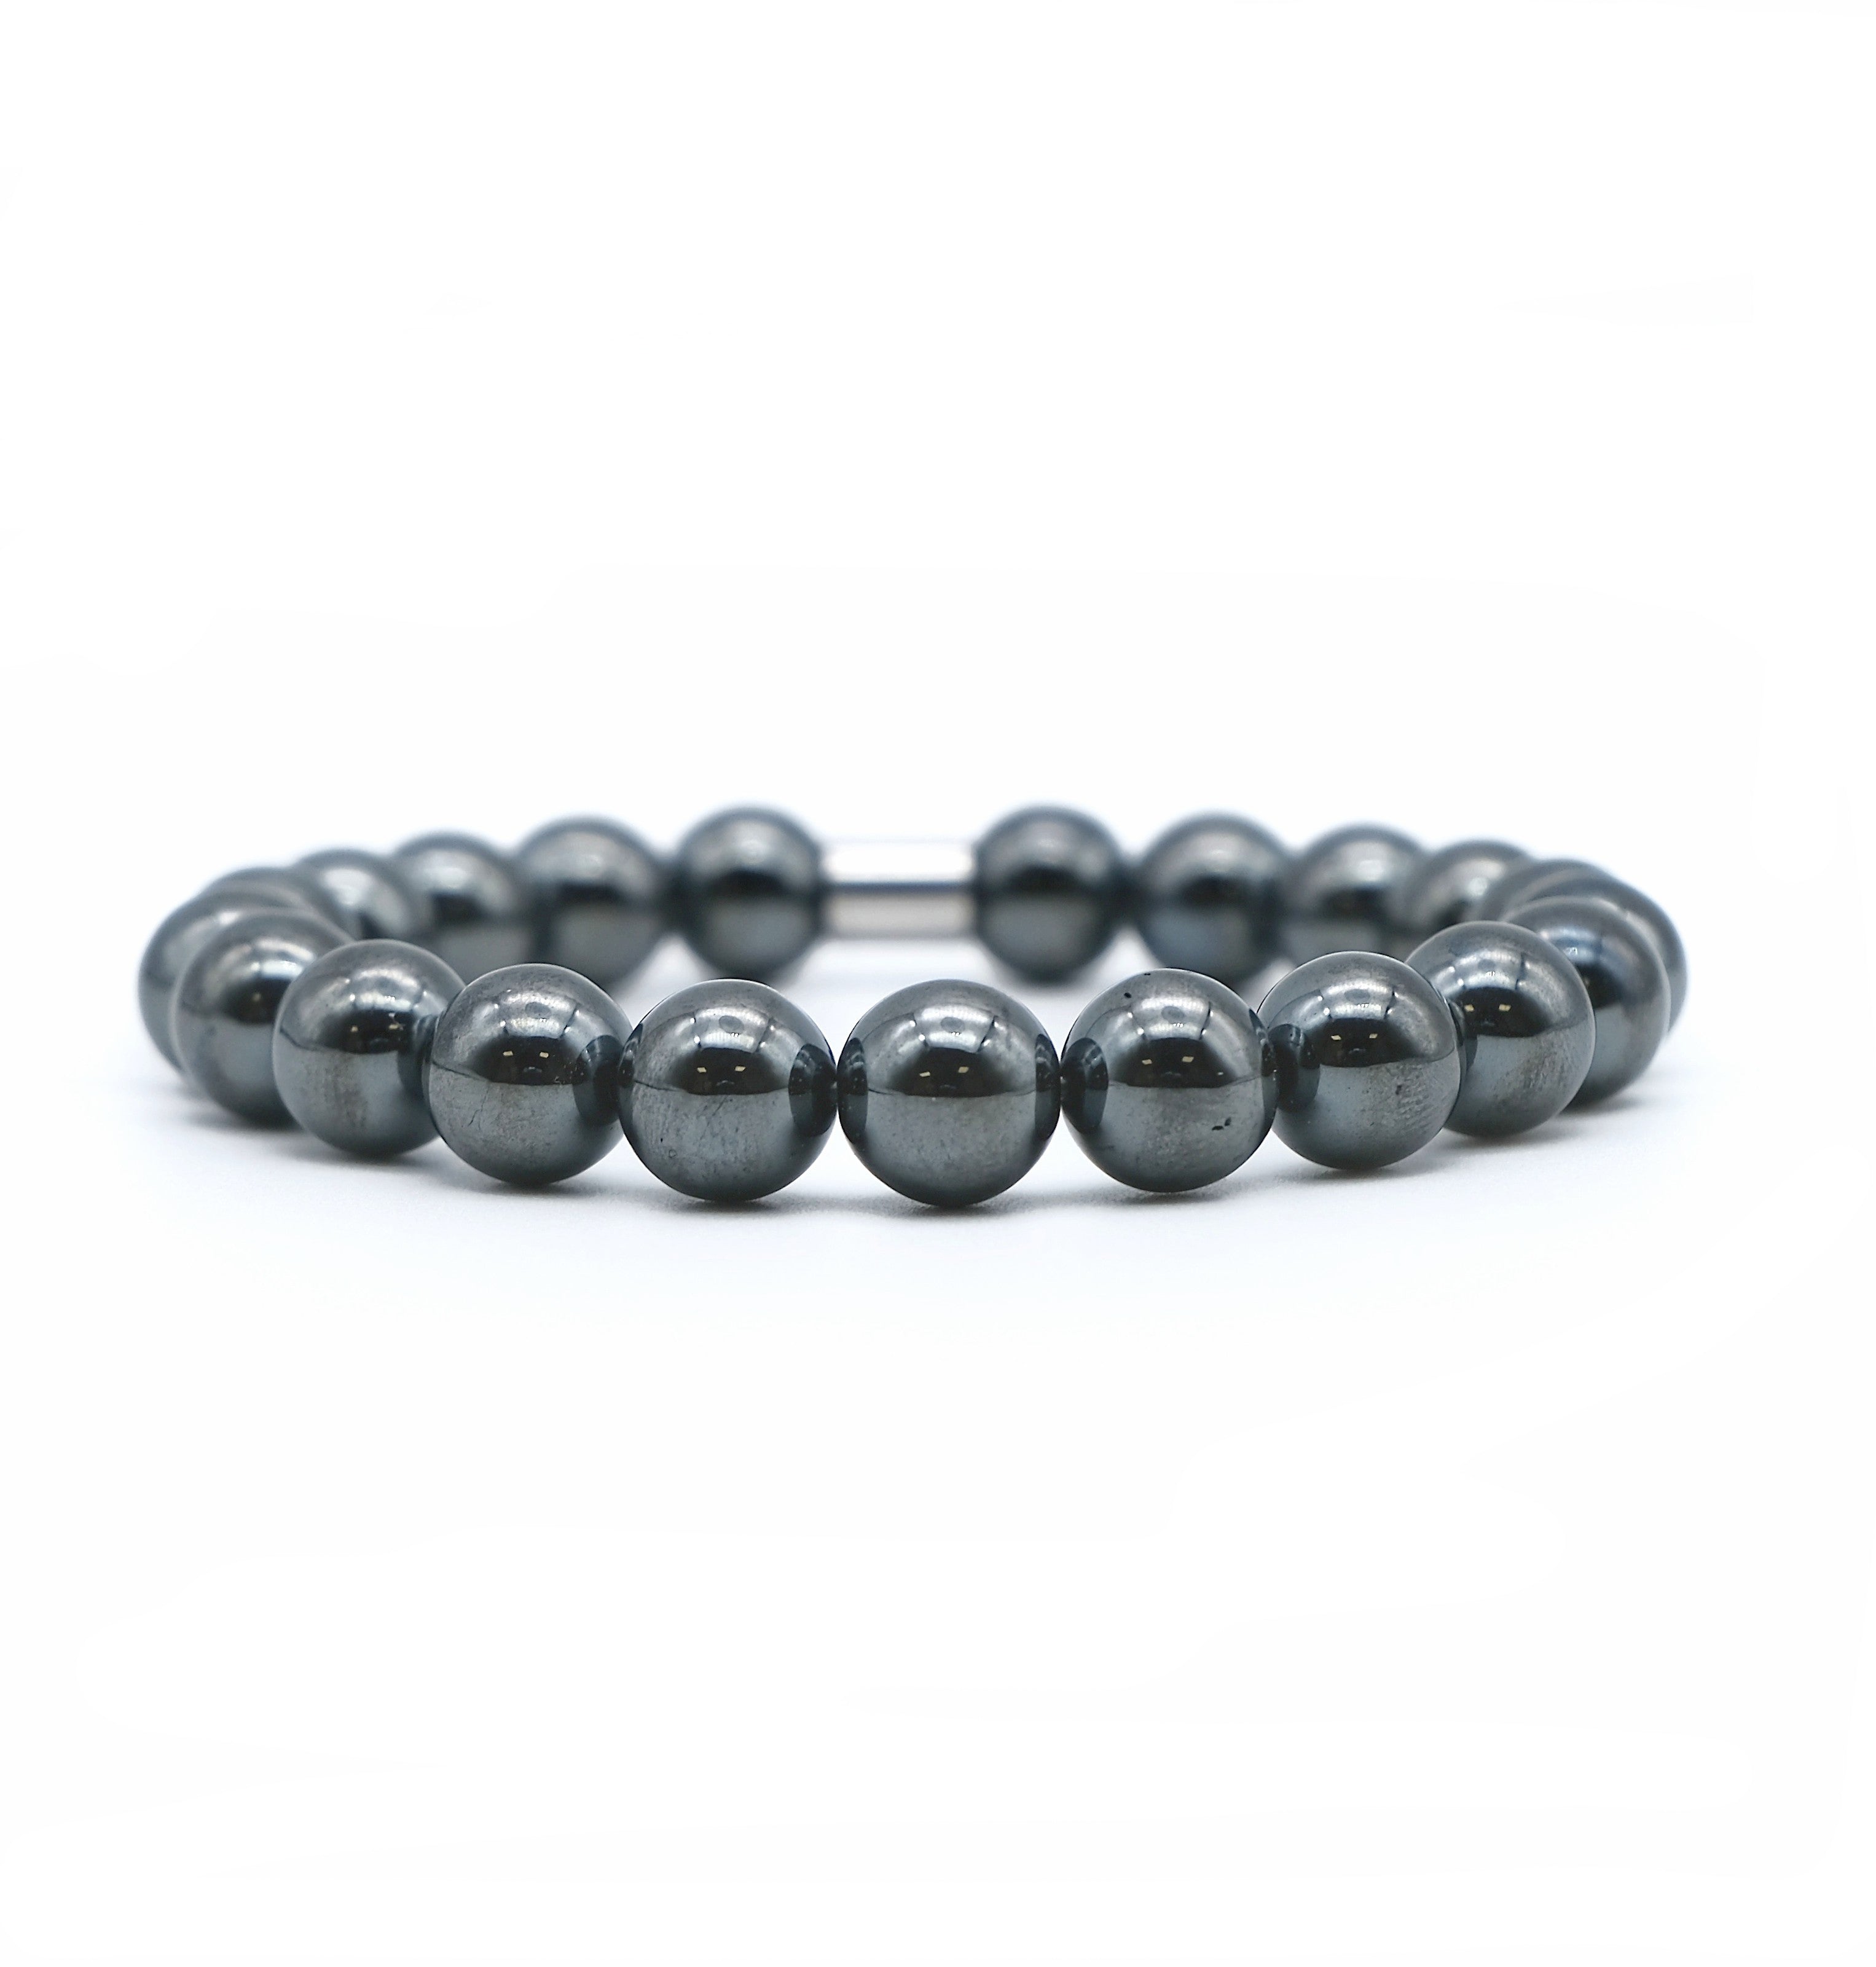 hematite gemstone bracelet in 10mm beads with steel accessory